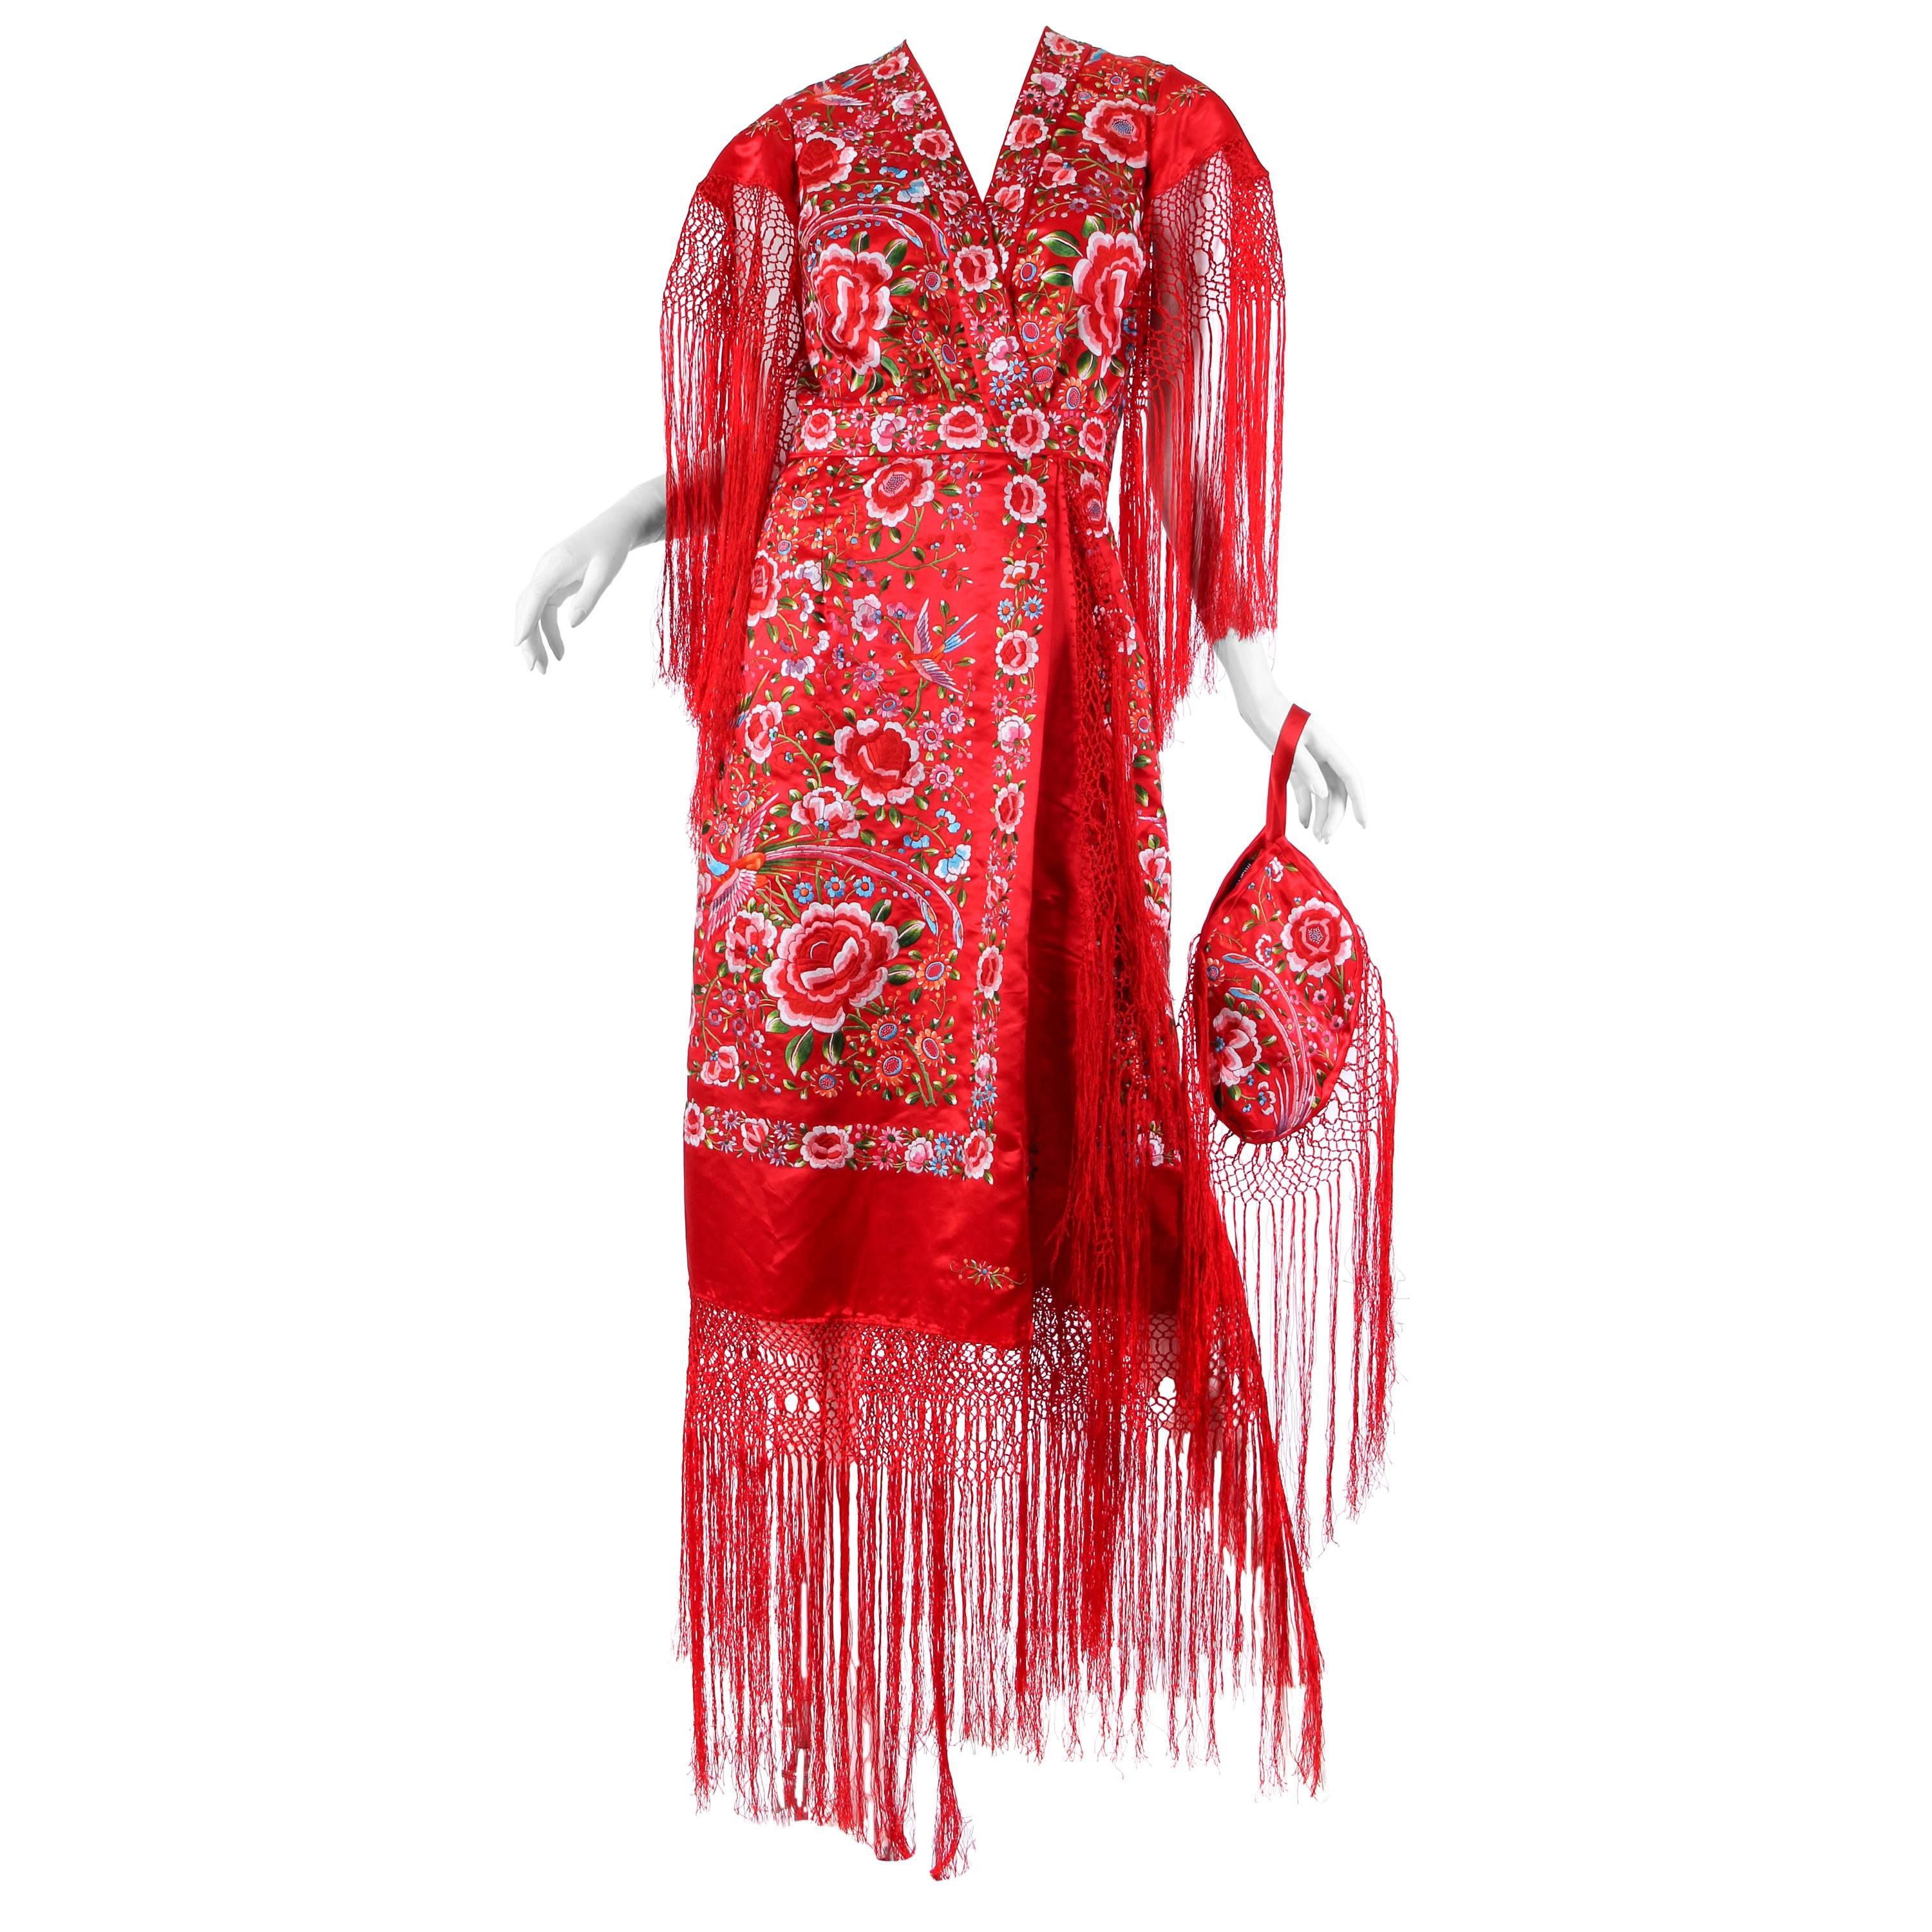 Phenomenal Hand-Embroidered Chinese Shawl Dress with Fringe